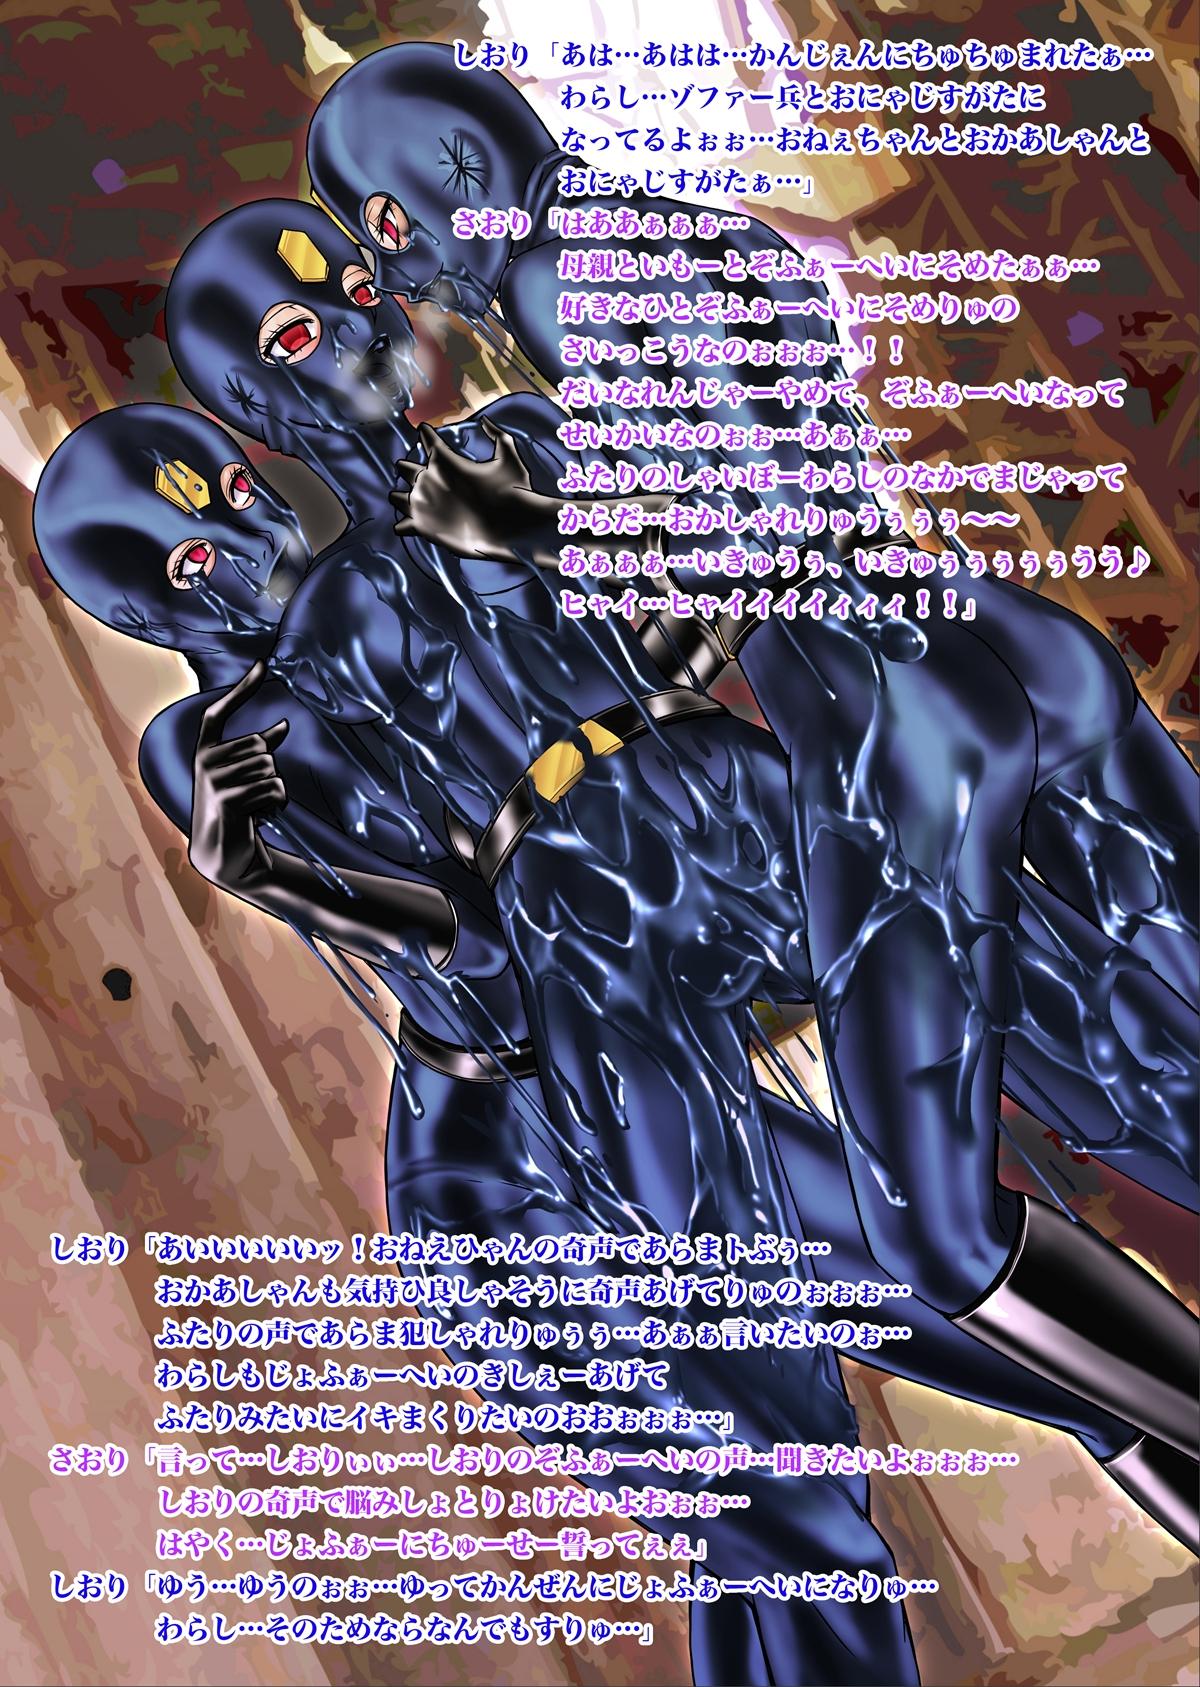 Tokubou Sentai Dina Ranger "Vol.2 Special Edition" 42